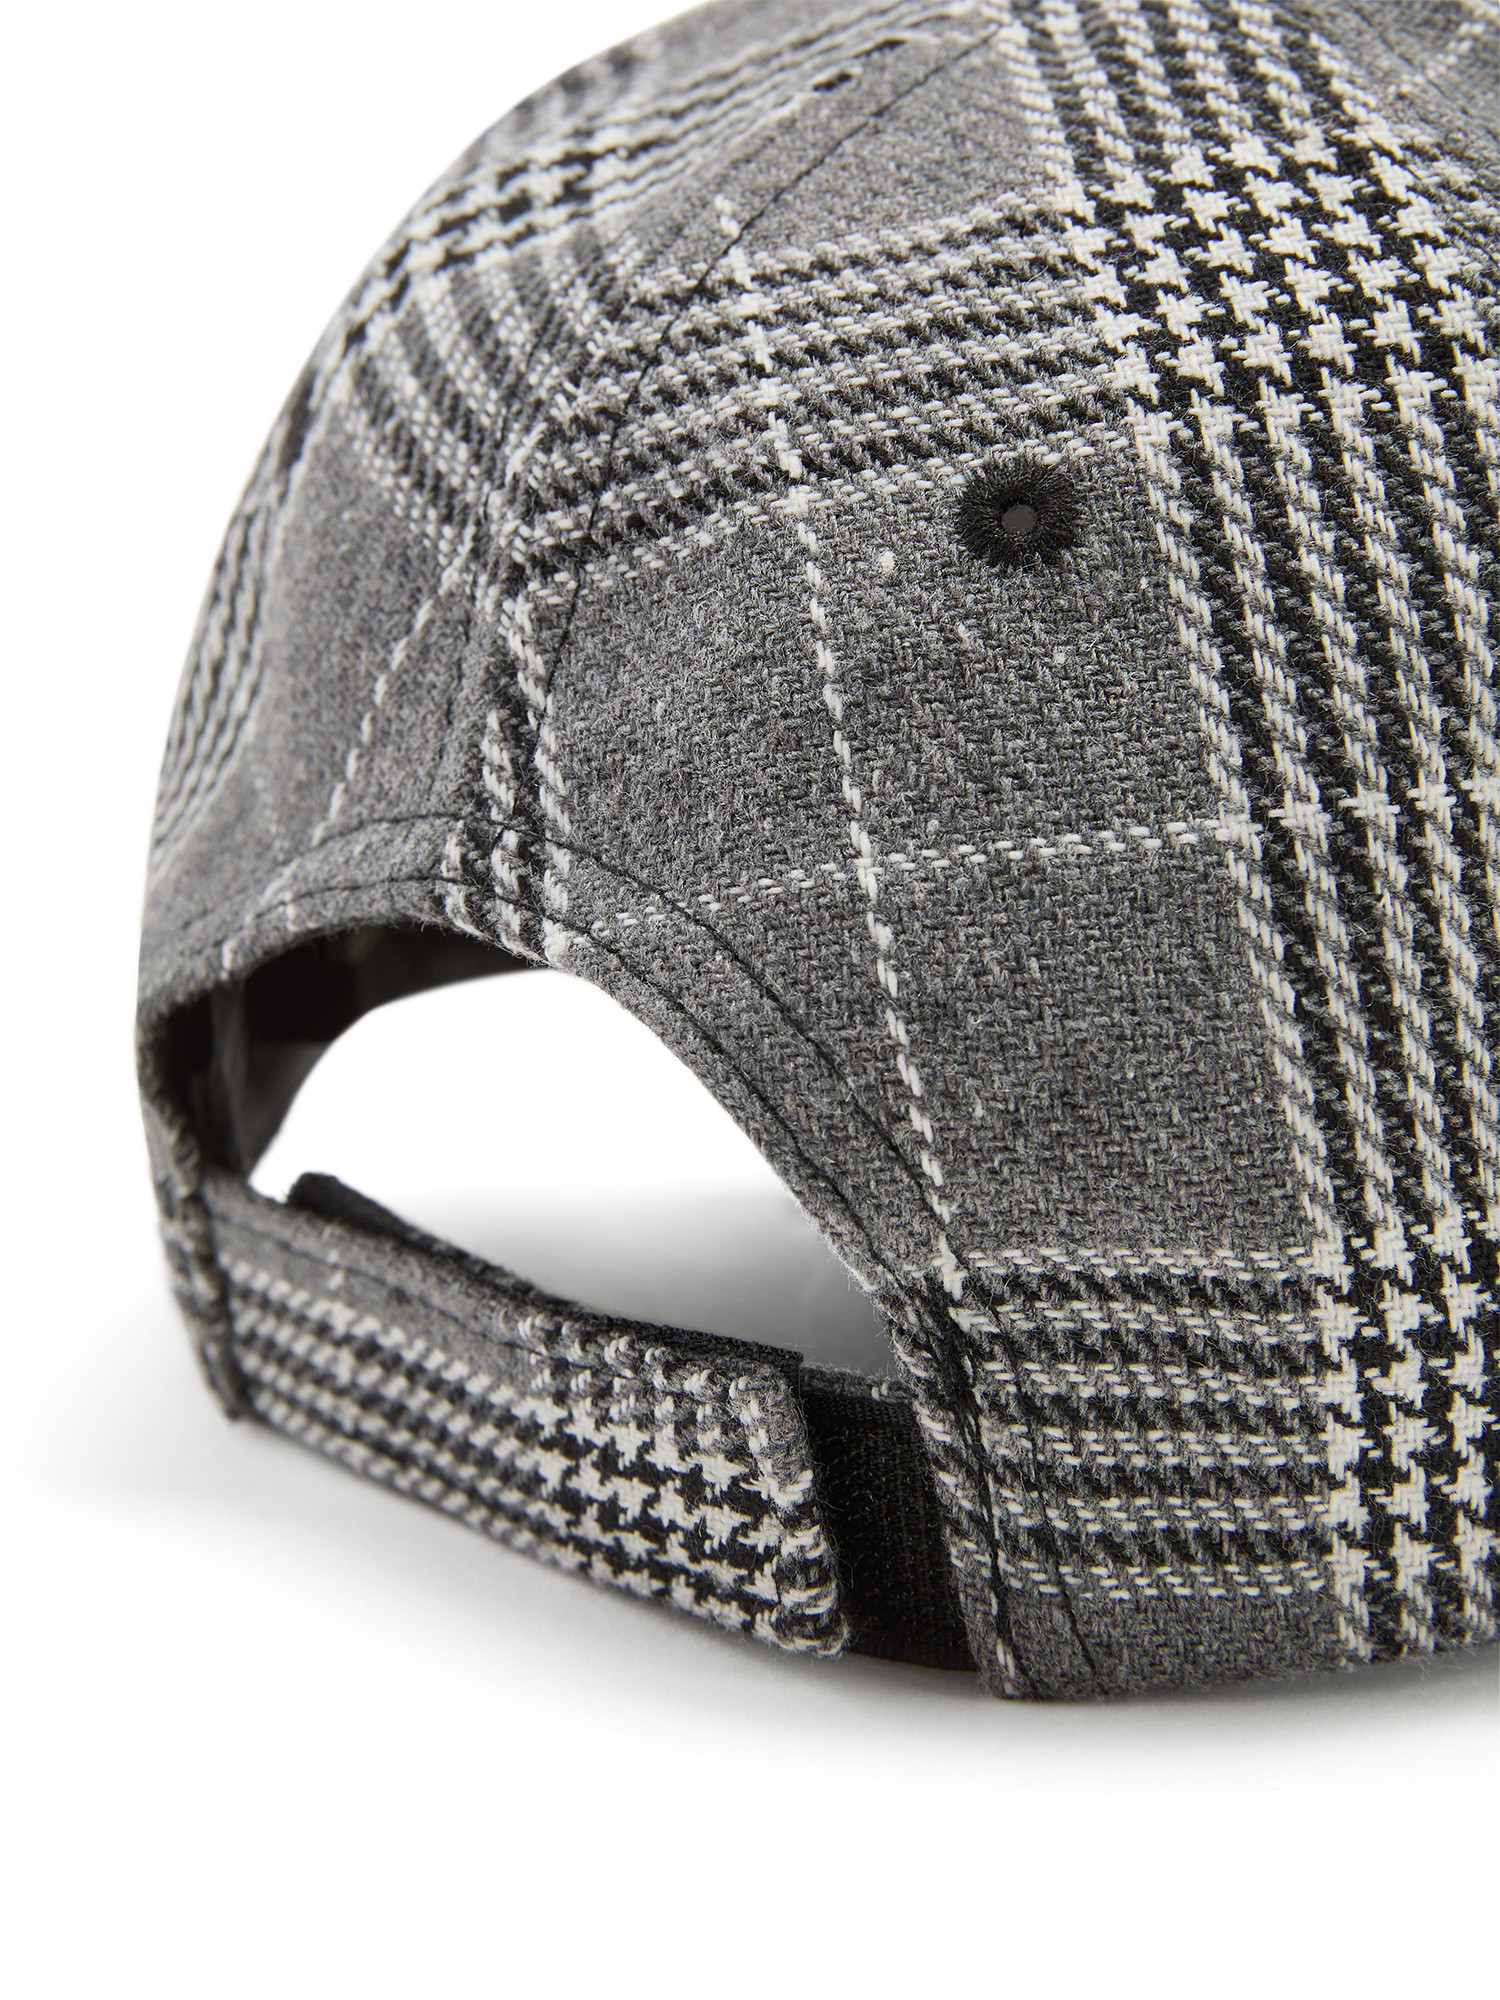 Luca D'Altieri - Cloth baseball cap, Black, large image number 1